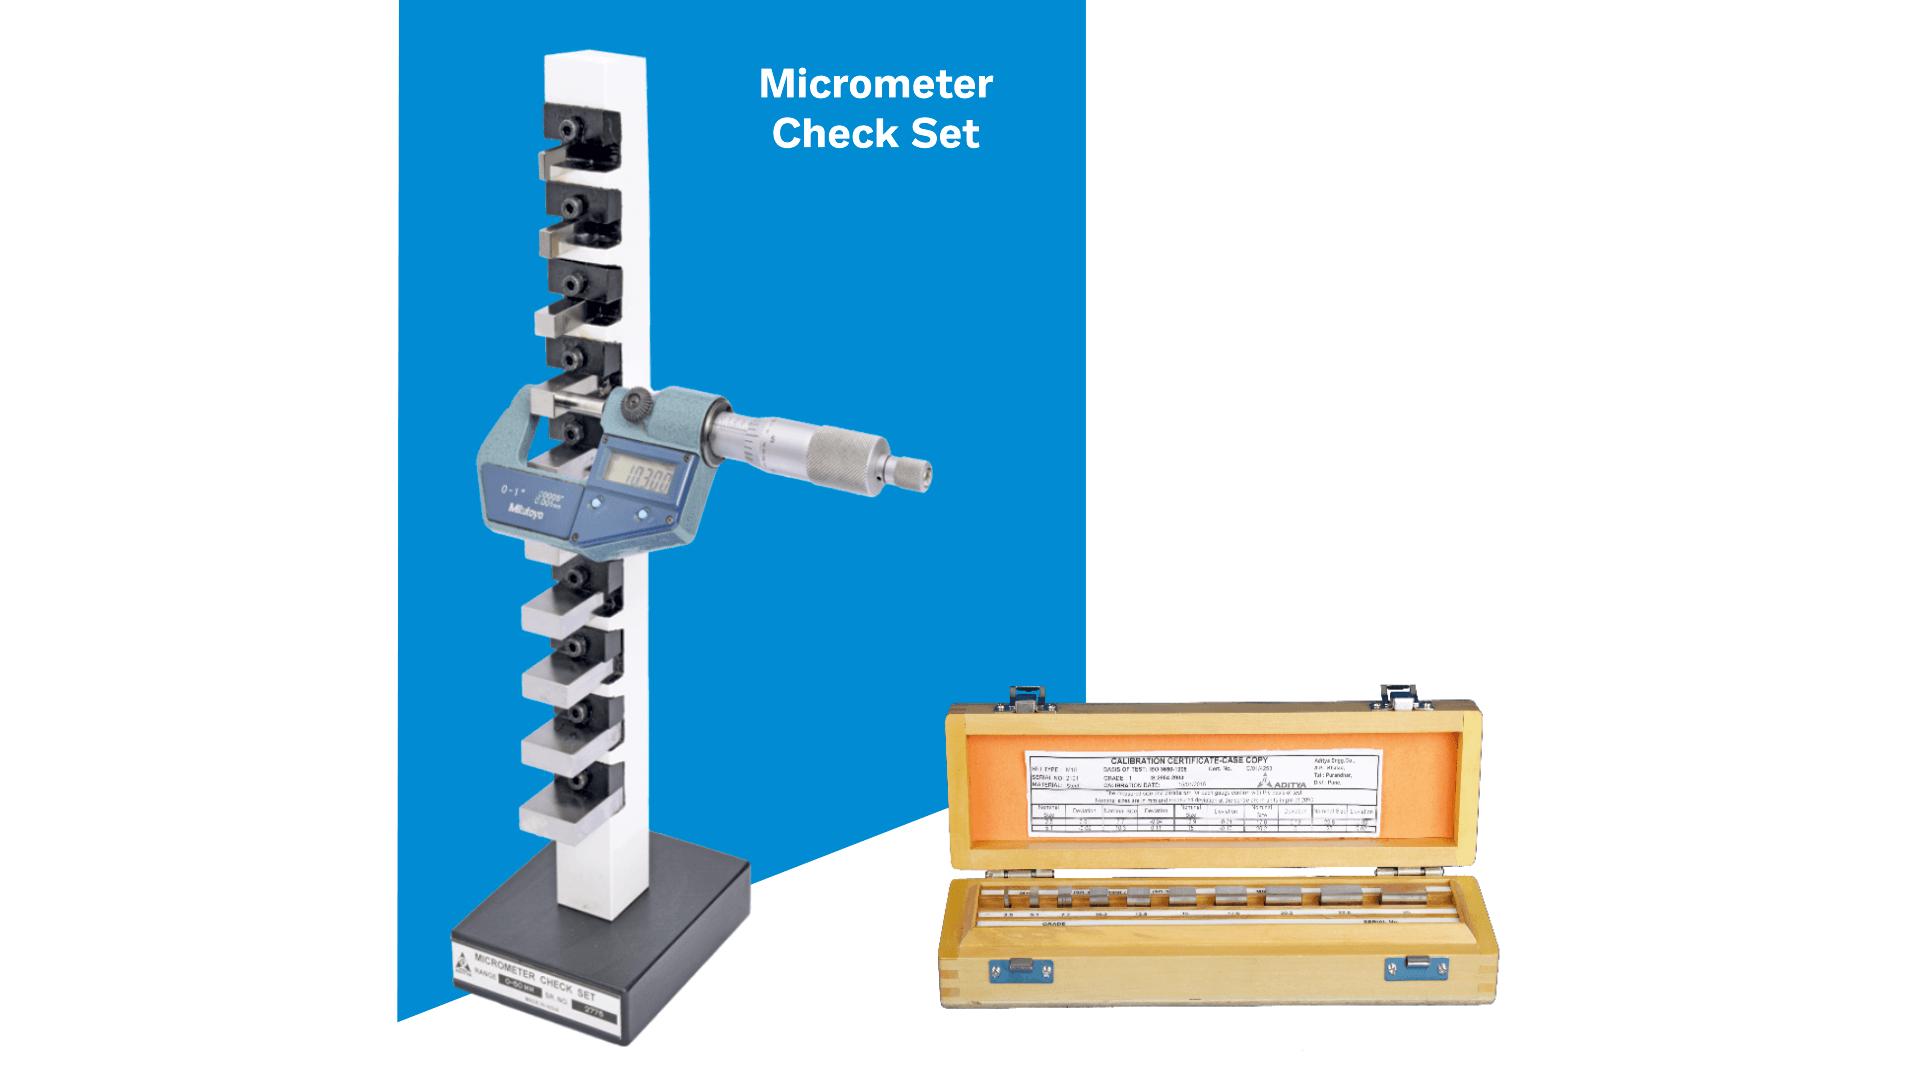 Micrometer Check Set